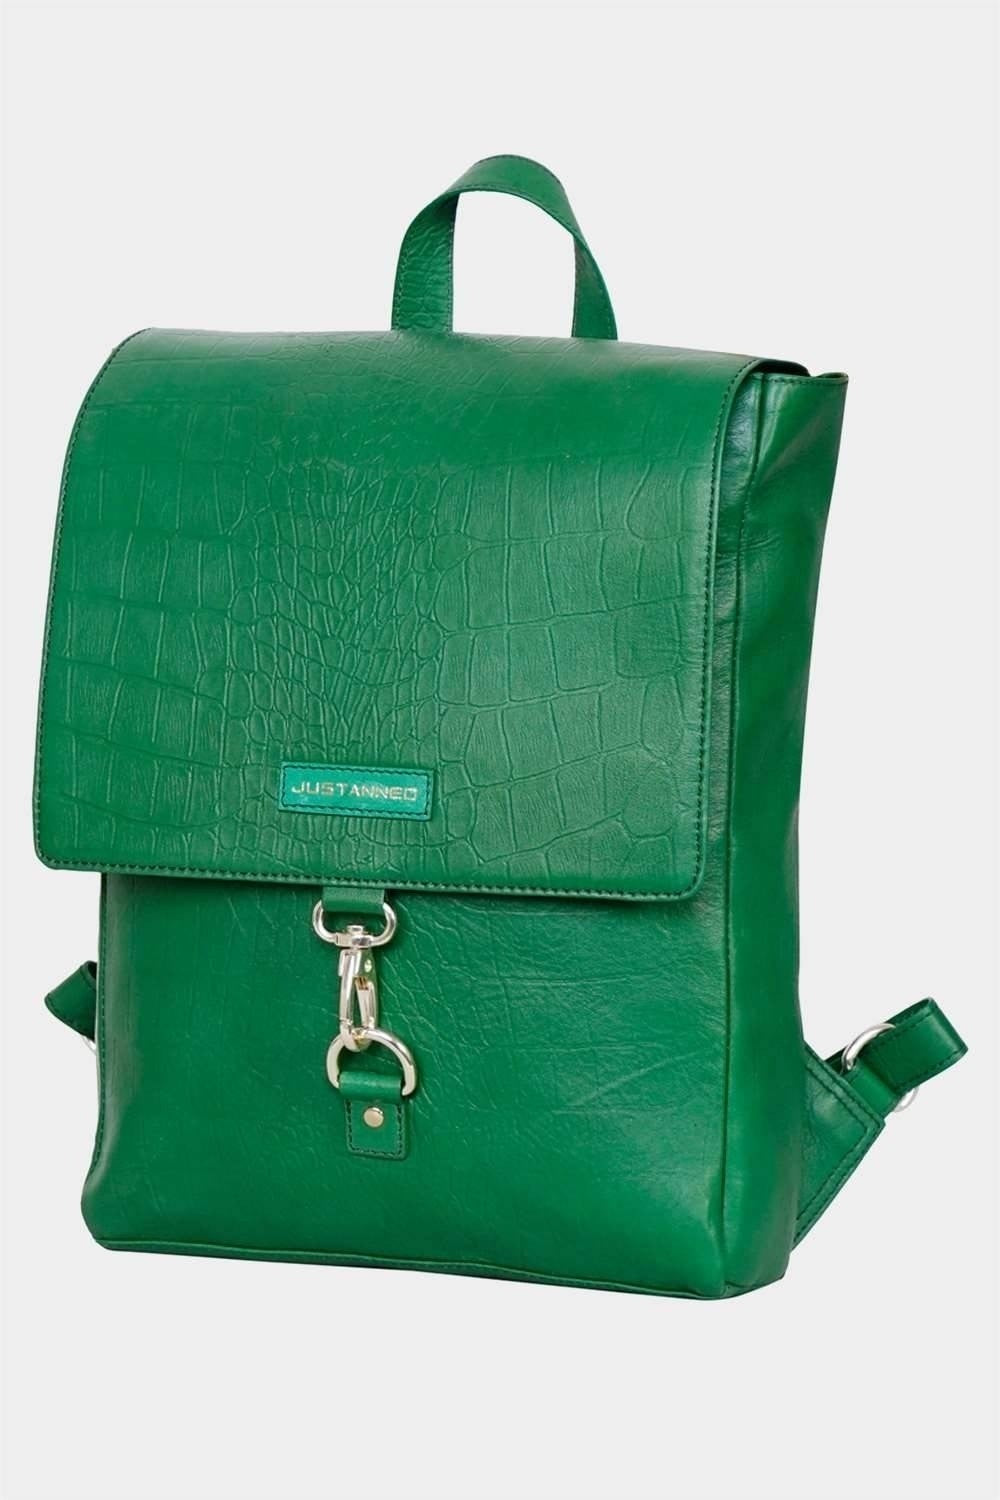 CHANEL Sport Unisex Vintage Green/Black Canvas Logo Crossbody Shoulder Mini  Bag 